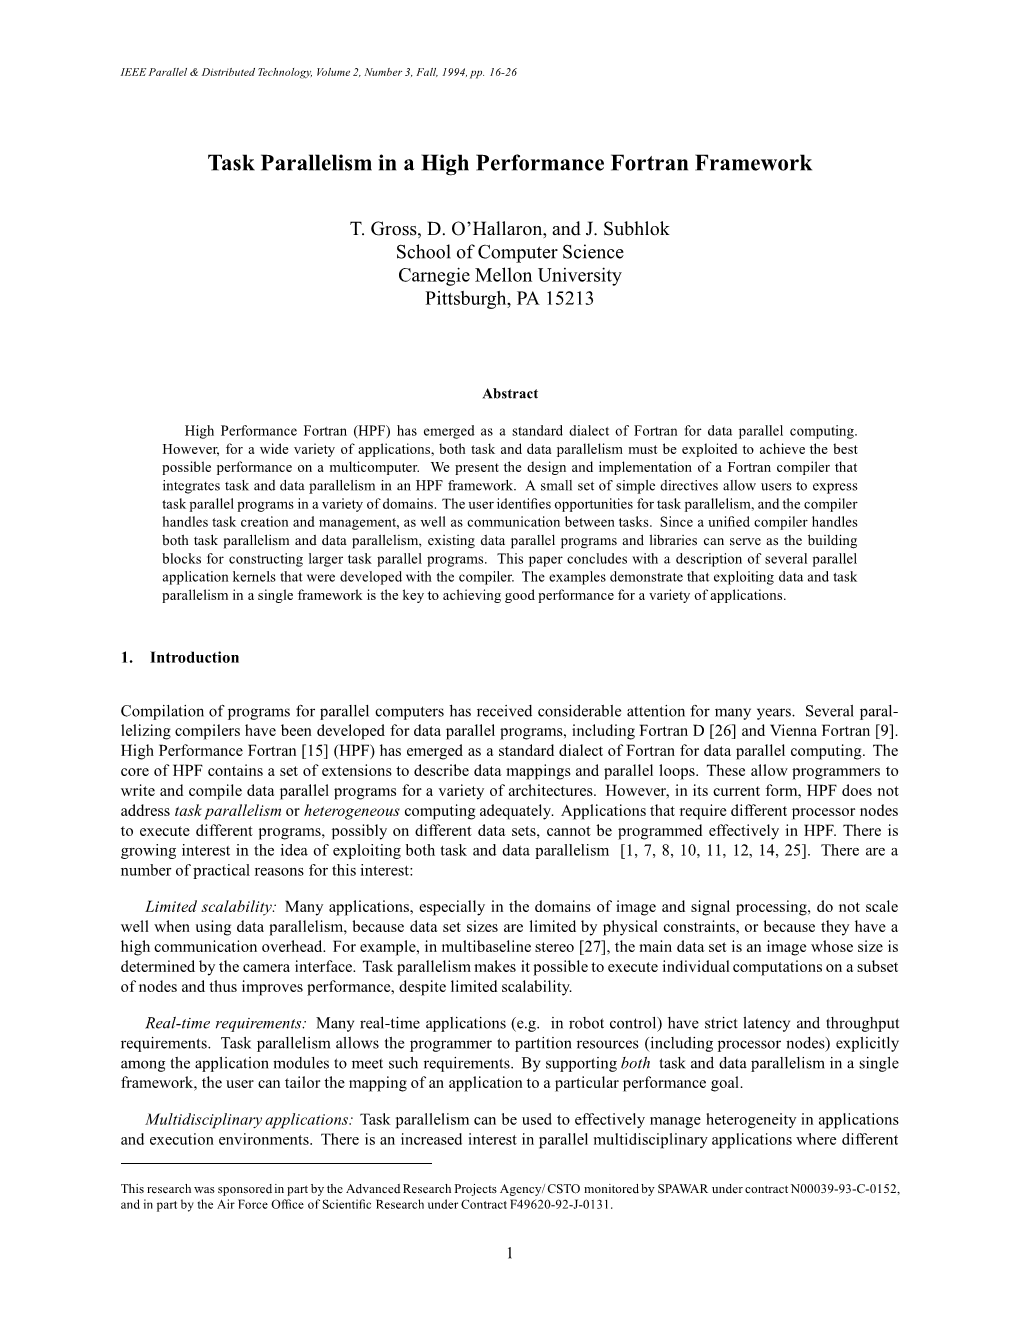 Task Parallelism in a High Performance Fortran Framework